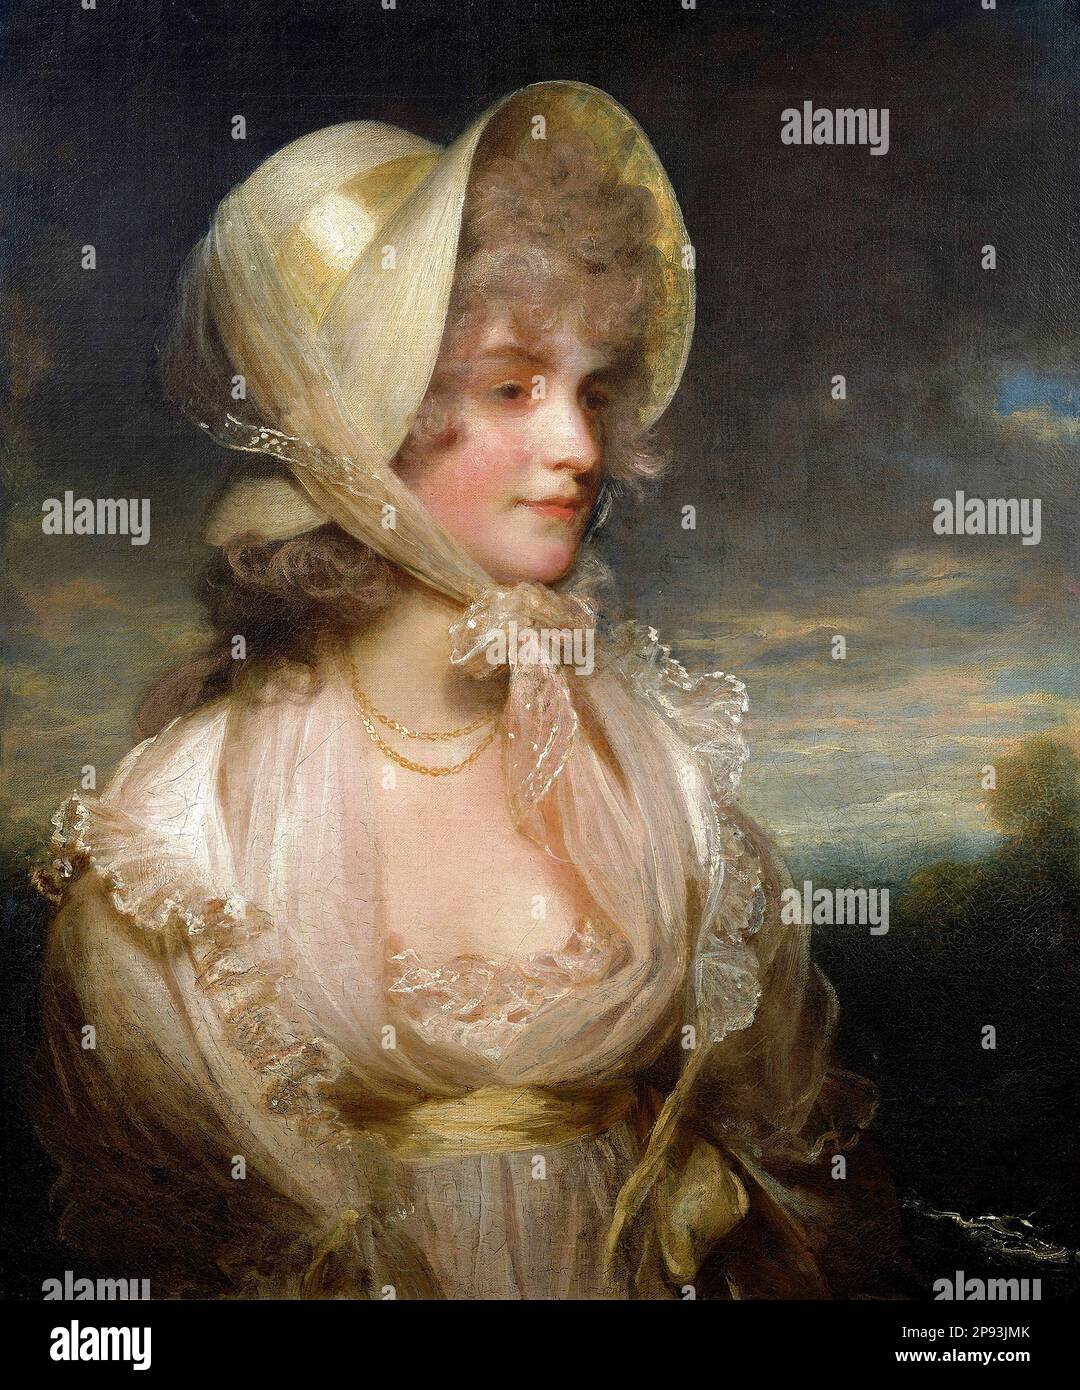 Elizabeth Sophia Baillie (née de Vismes) by the English artist, John Hoppner (1758 -1810), oil on canvas, c. 1795 Stock Photo